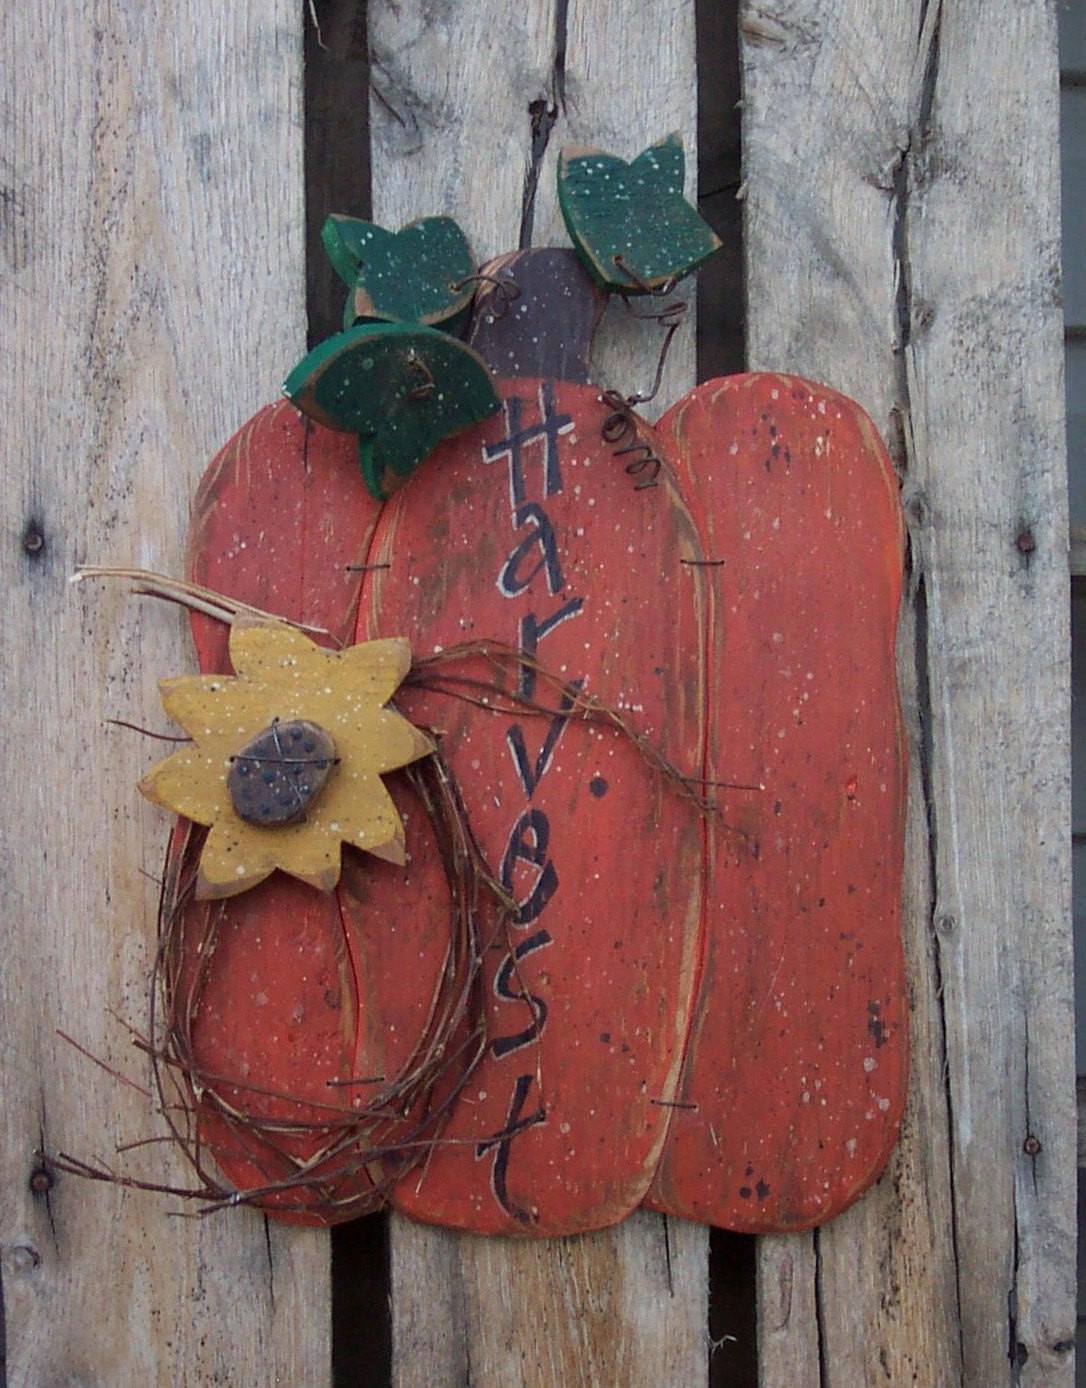 Best ideas about Wood Craft Patterns
. Save or Pin Harvest Pumpkin Wood Craft Pattern with by KaylasKornerDesigns Now.